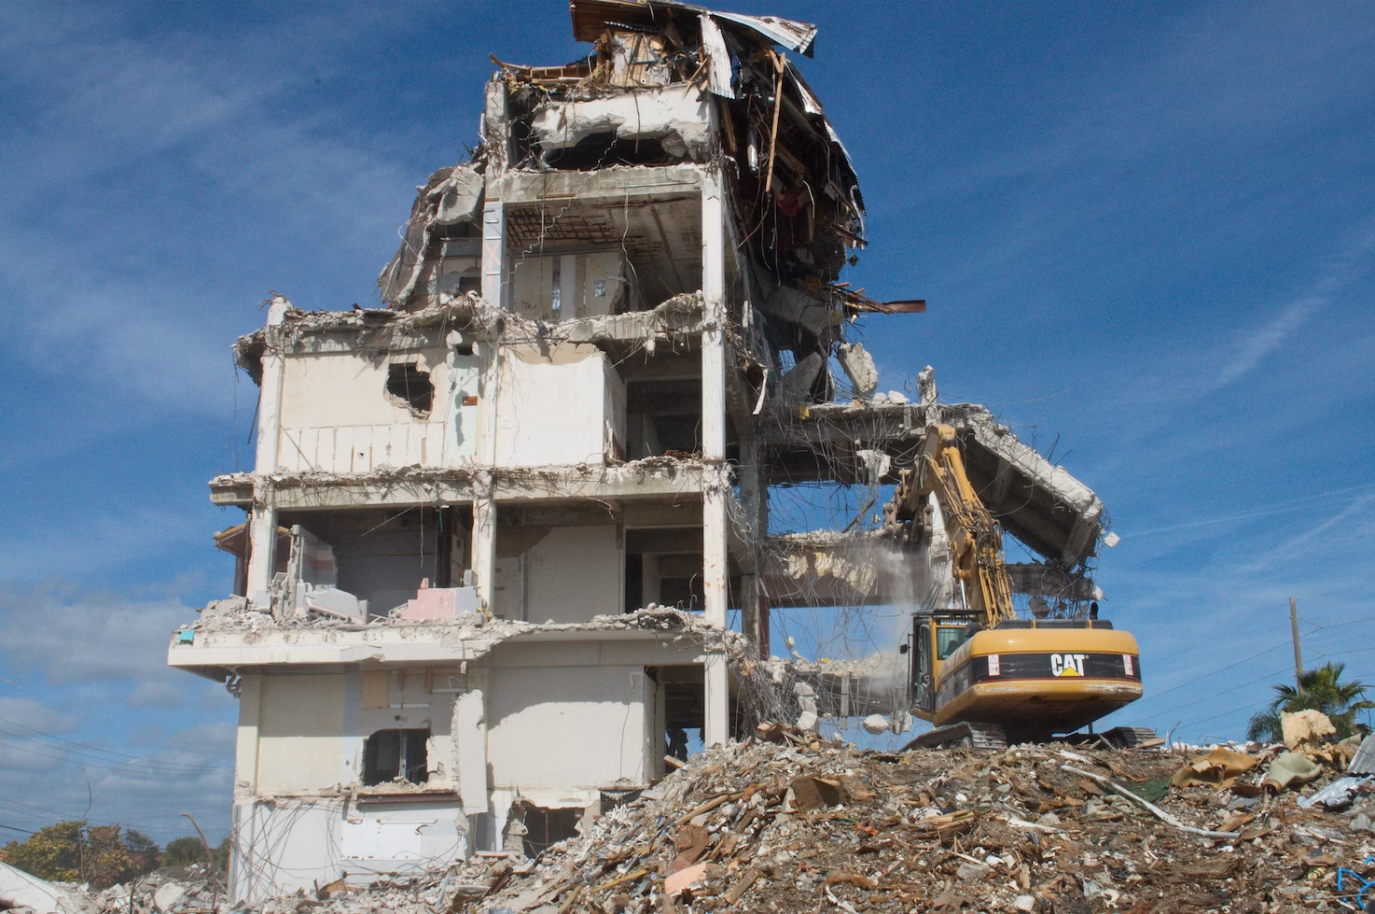 High-rise building demolition